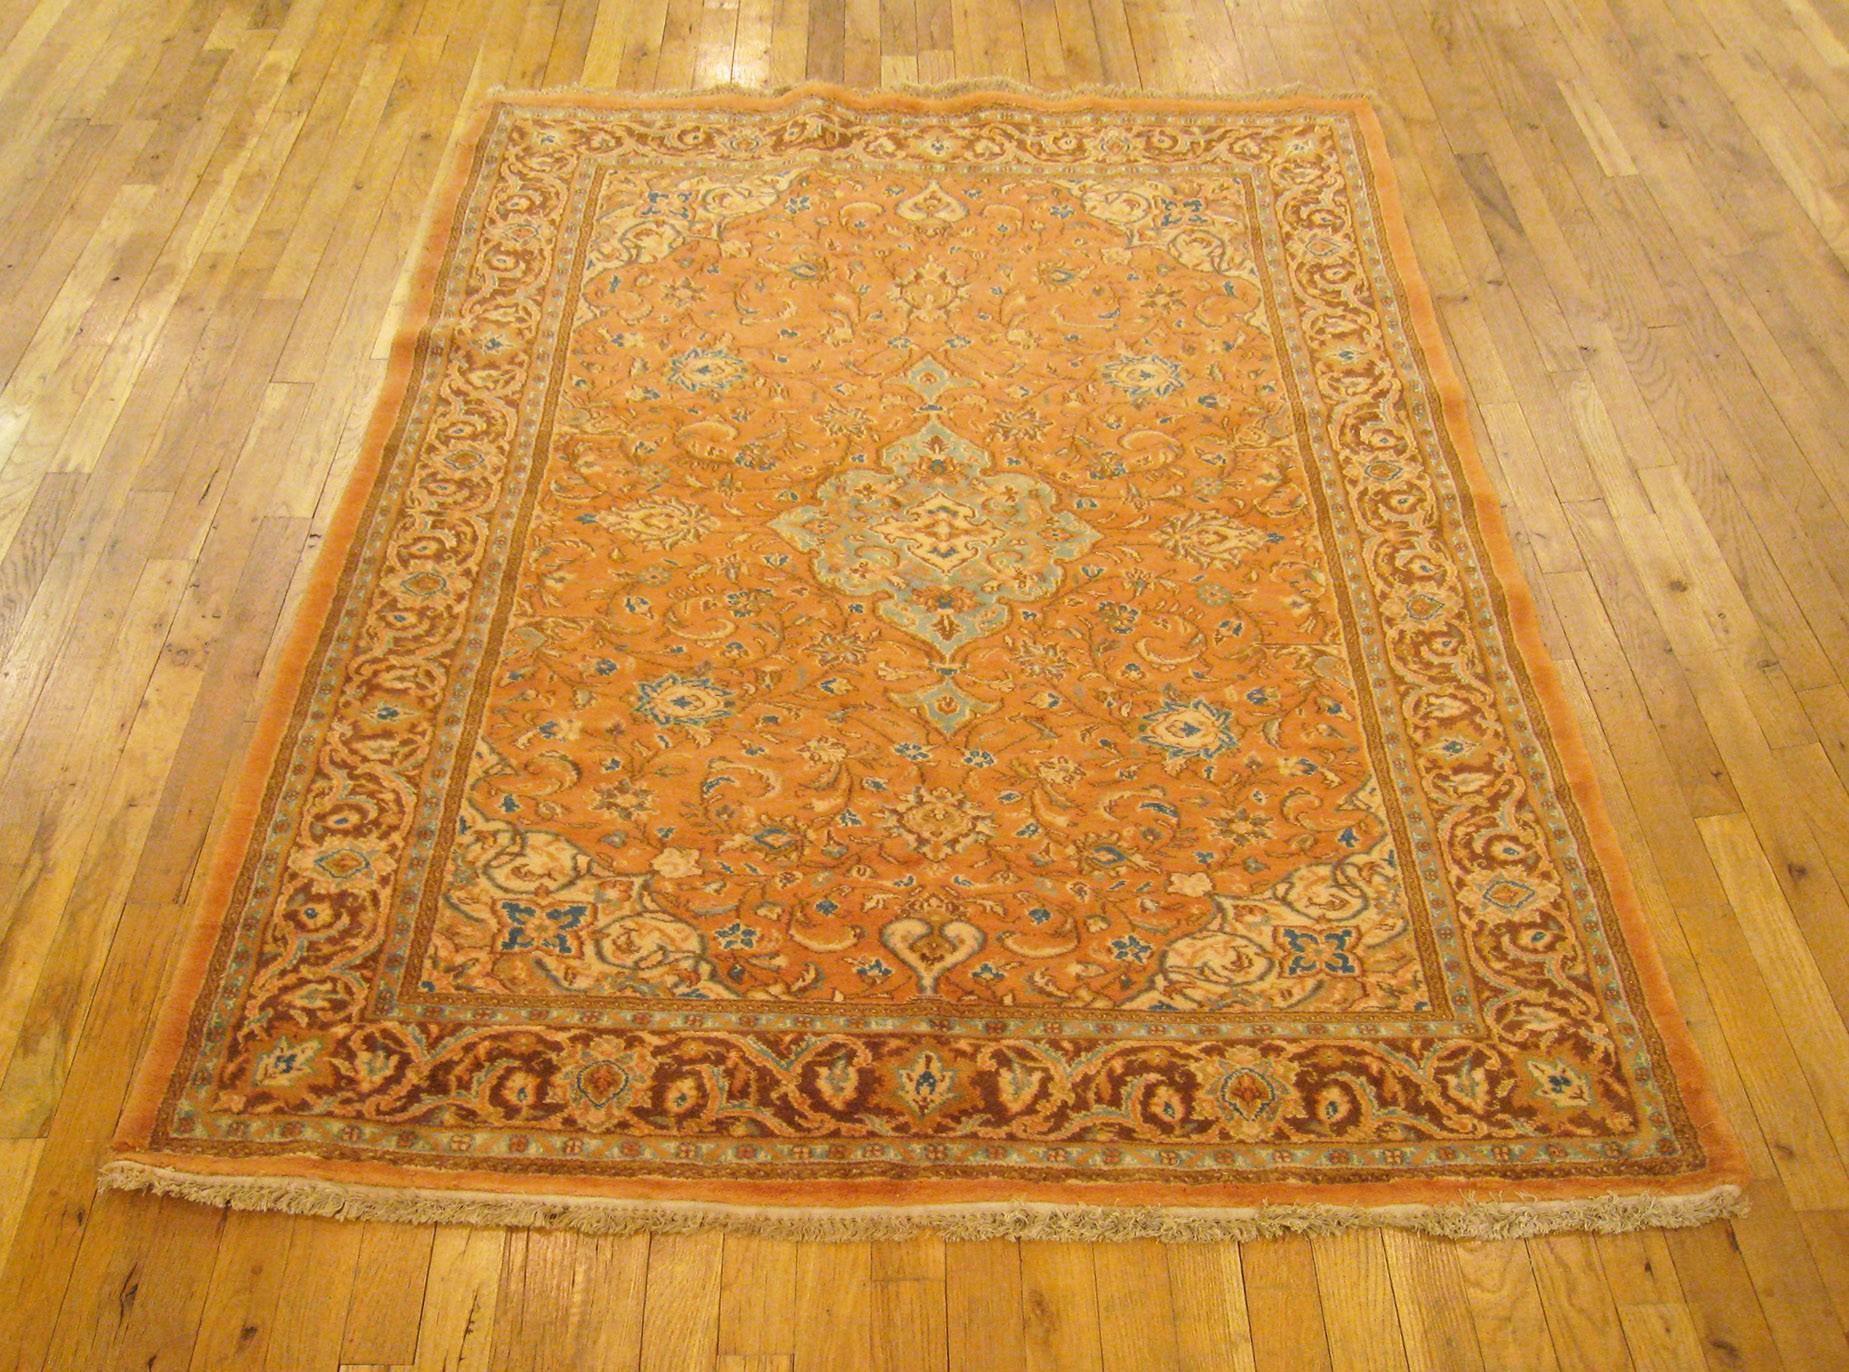 Vintage Persian Sarouk Oriental rug, circa 1950, Small size

A vintage Persian Sarouk oriental rug, size 6'8